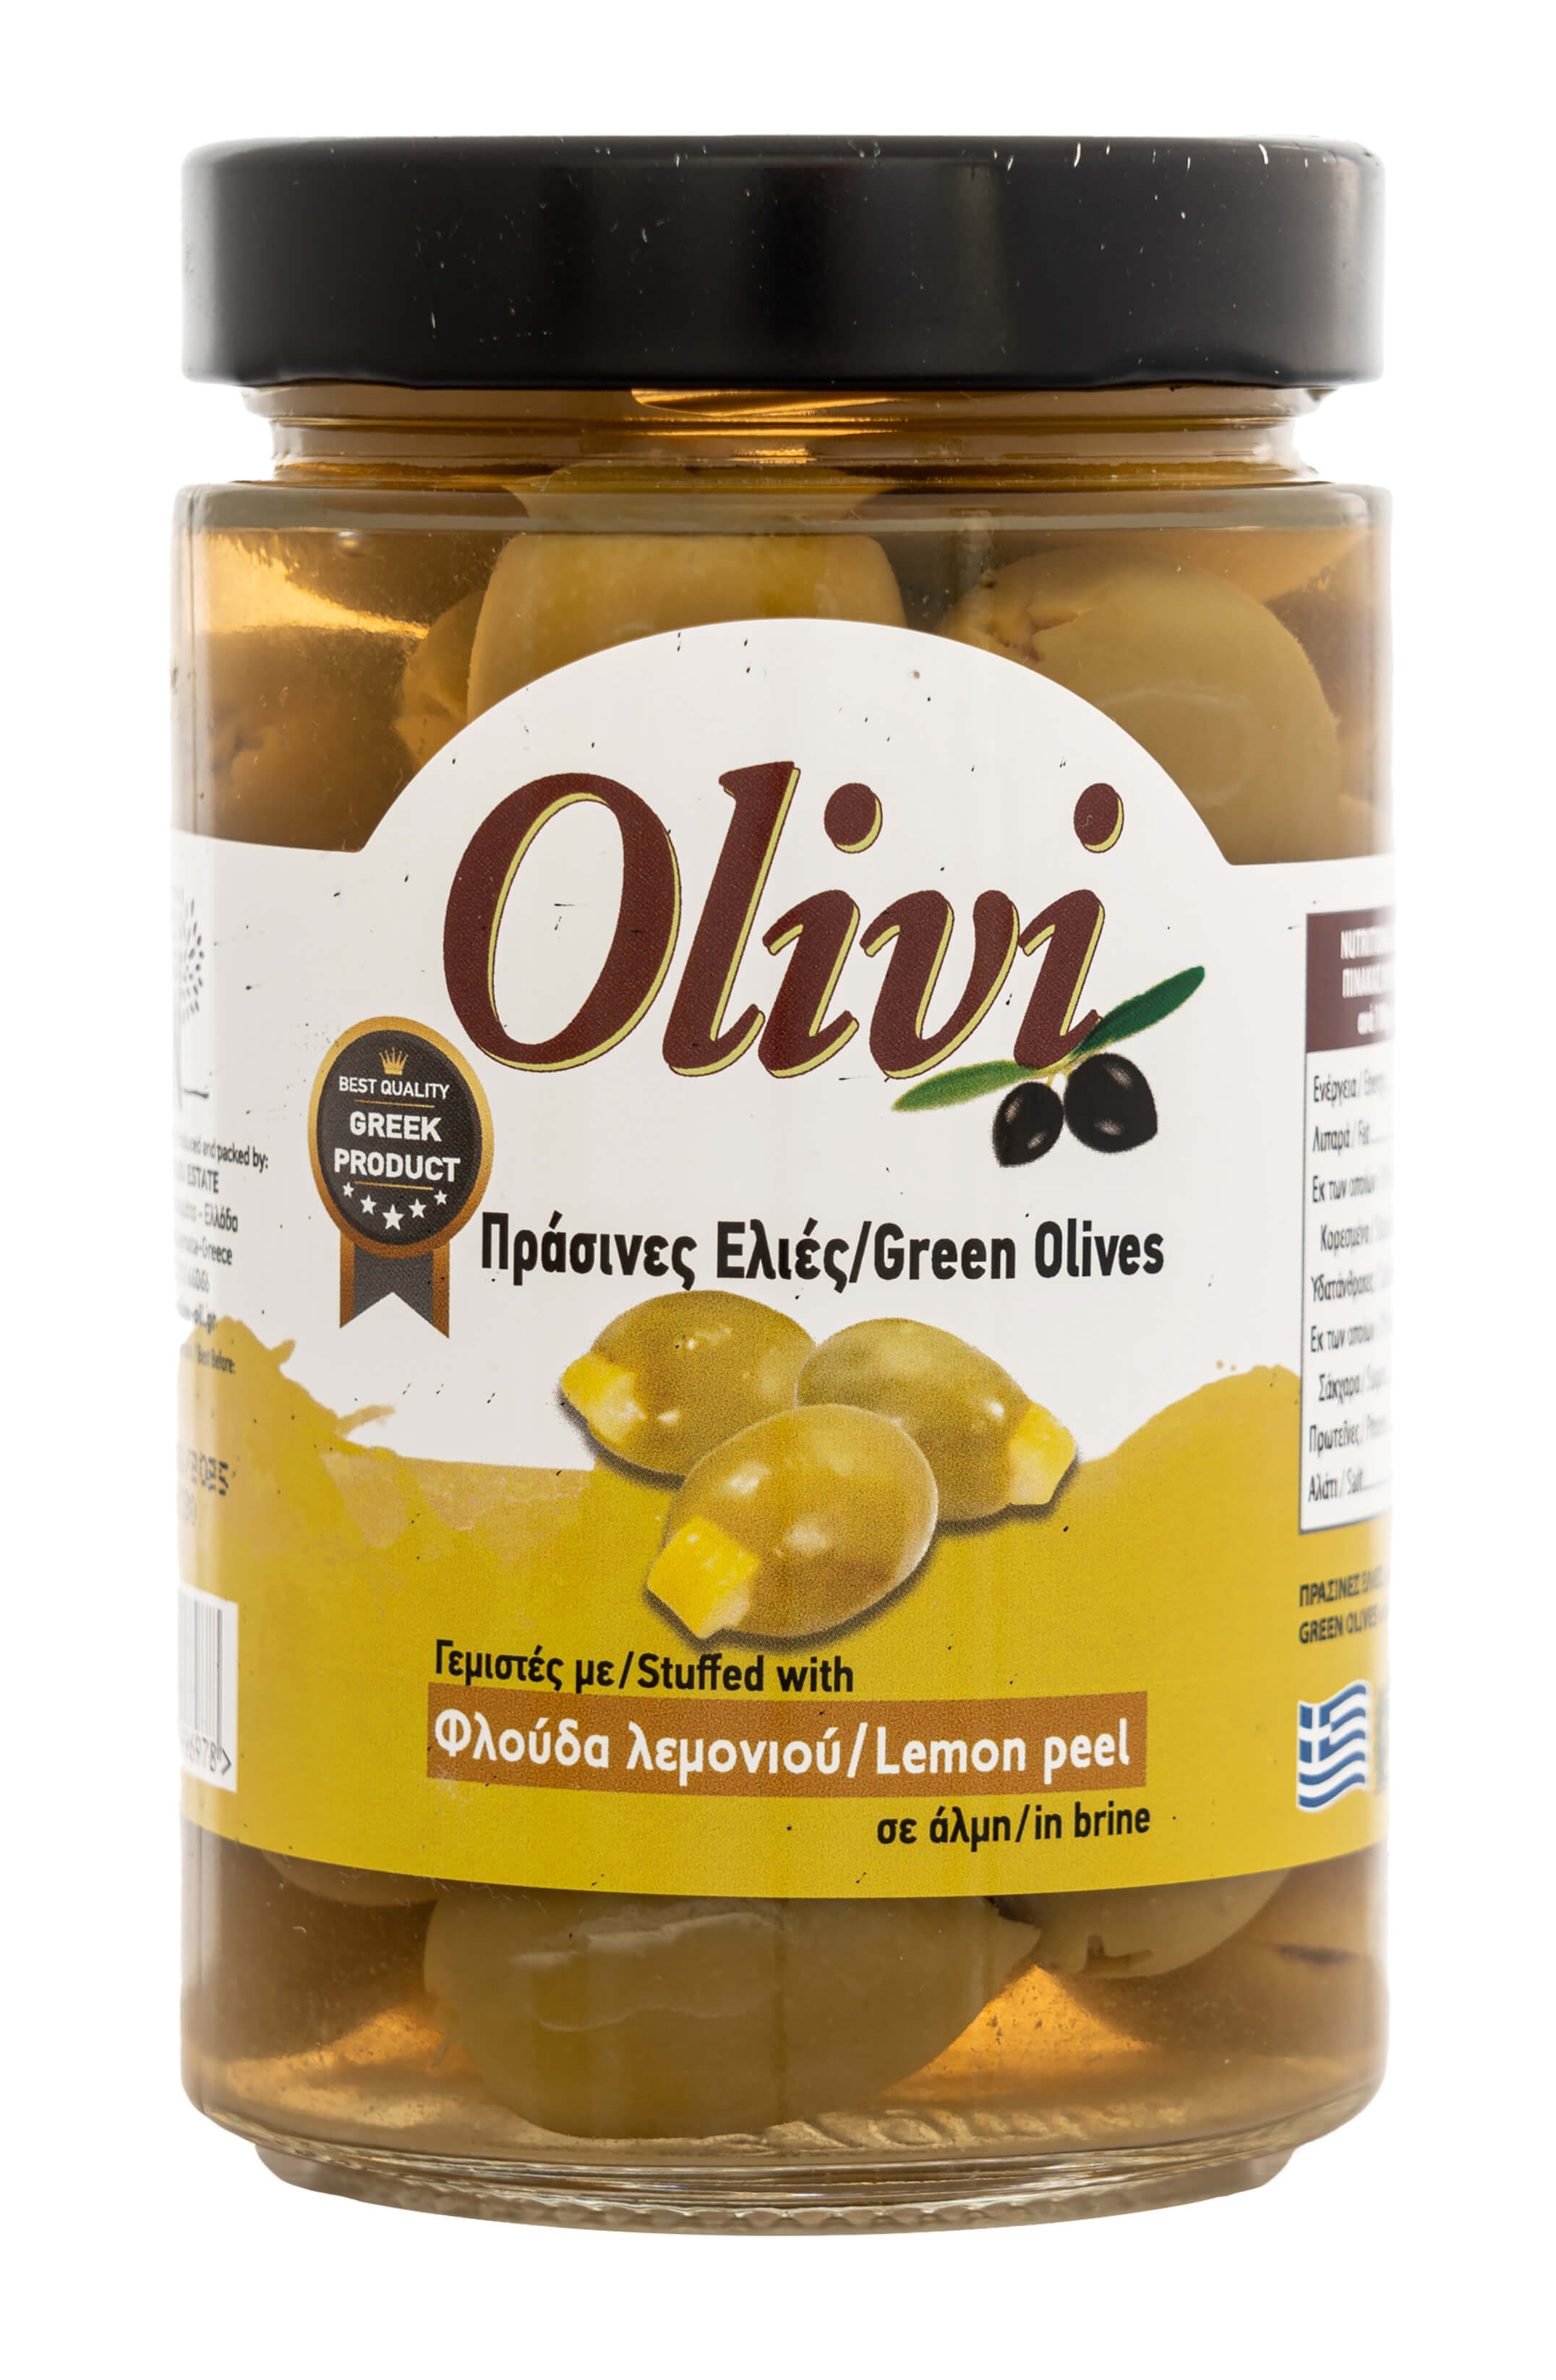 Green Olives stuffed with lemon peel